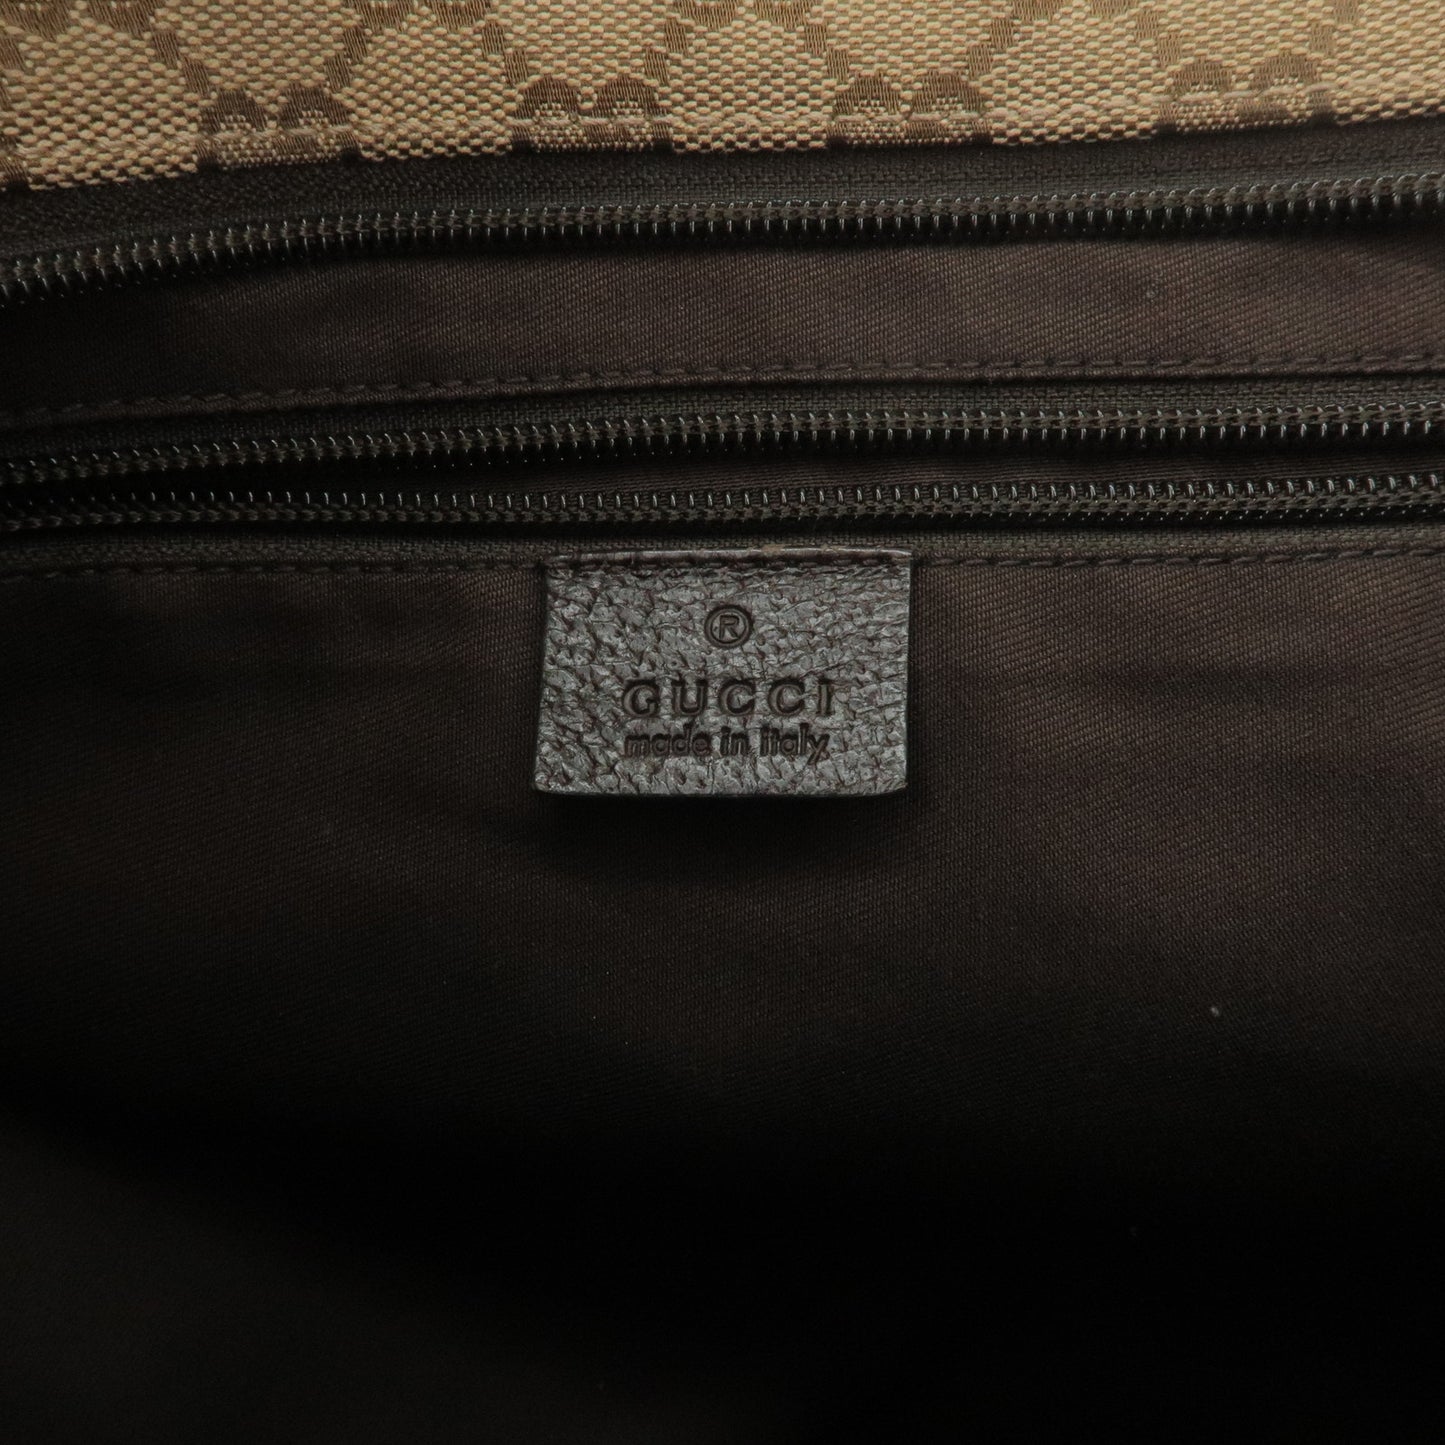 GUCCI-Sherry-Line-GG-Canvas-Leather-Shoulder-Bag-Beige-189751